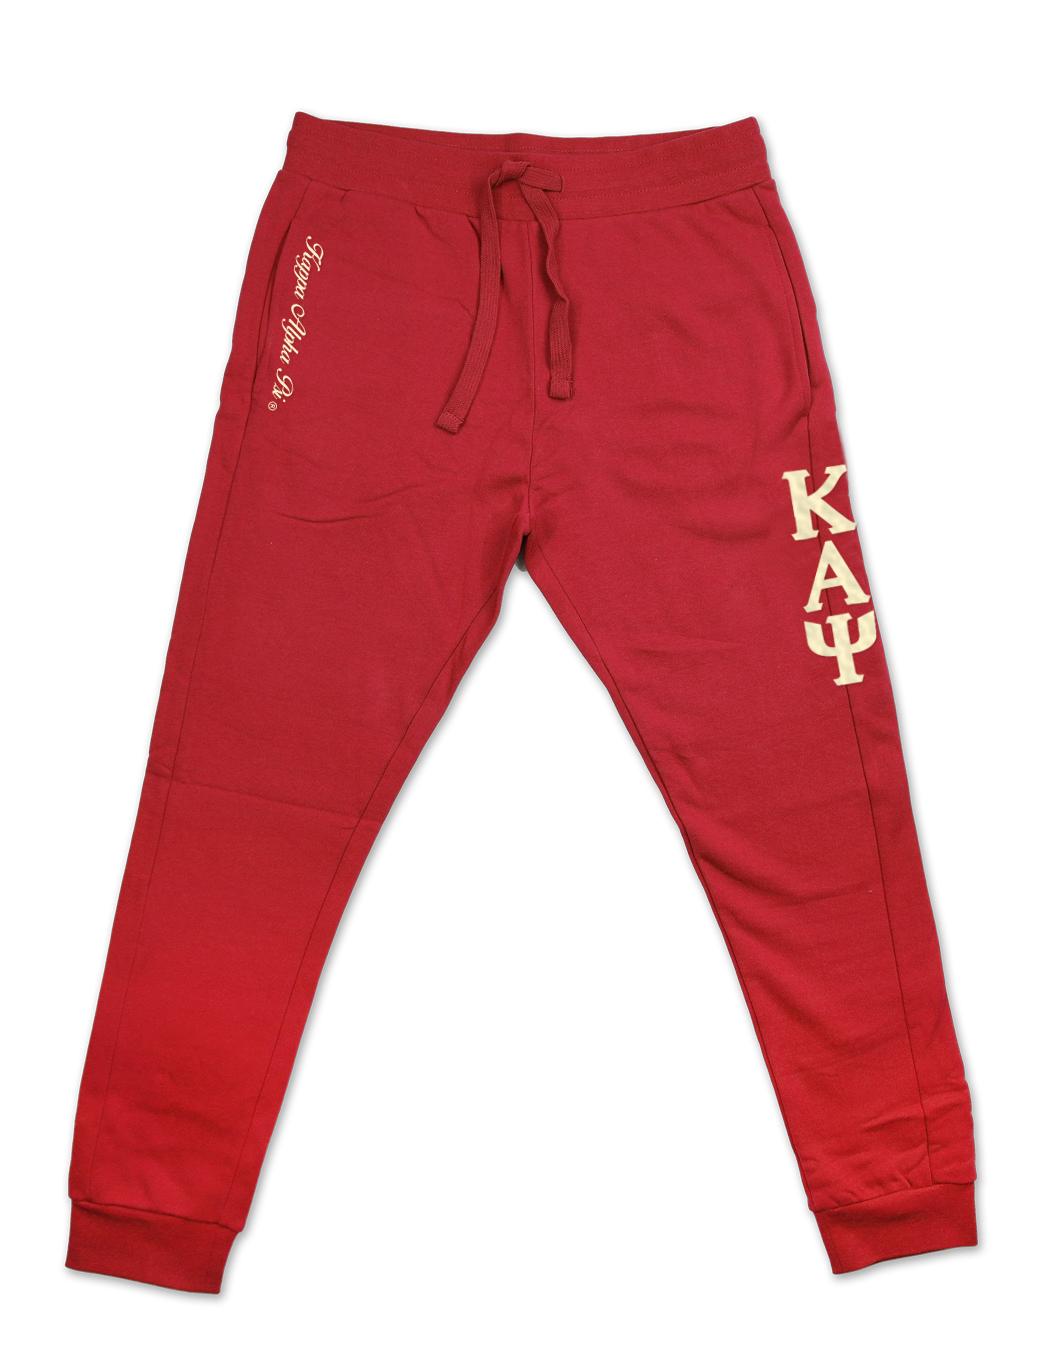 Kappa Alpha Psi apparel sweatpants